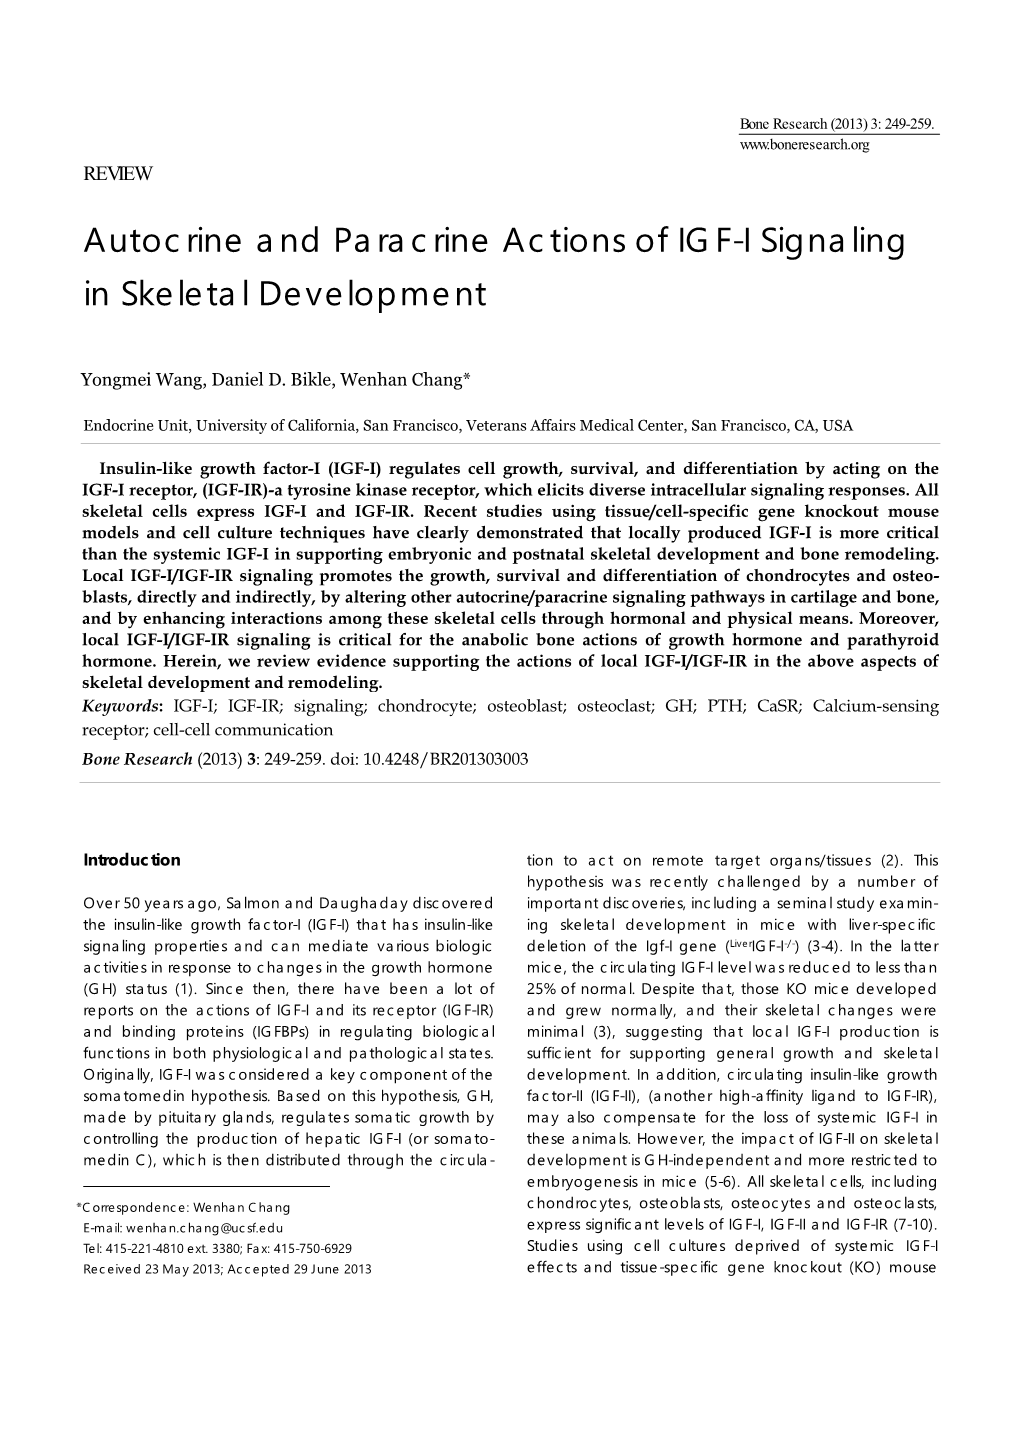 Autocrine and Paracrine Actions of IGF-I Signaling in Skeletal Development